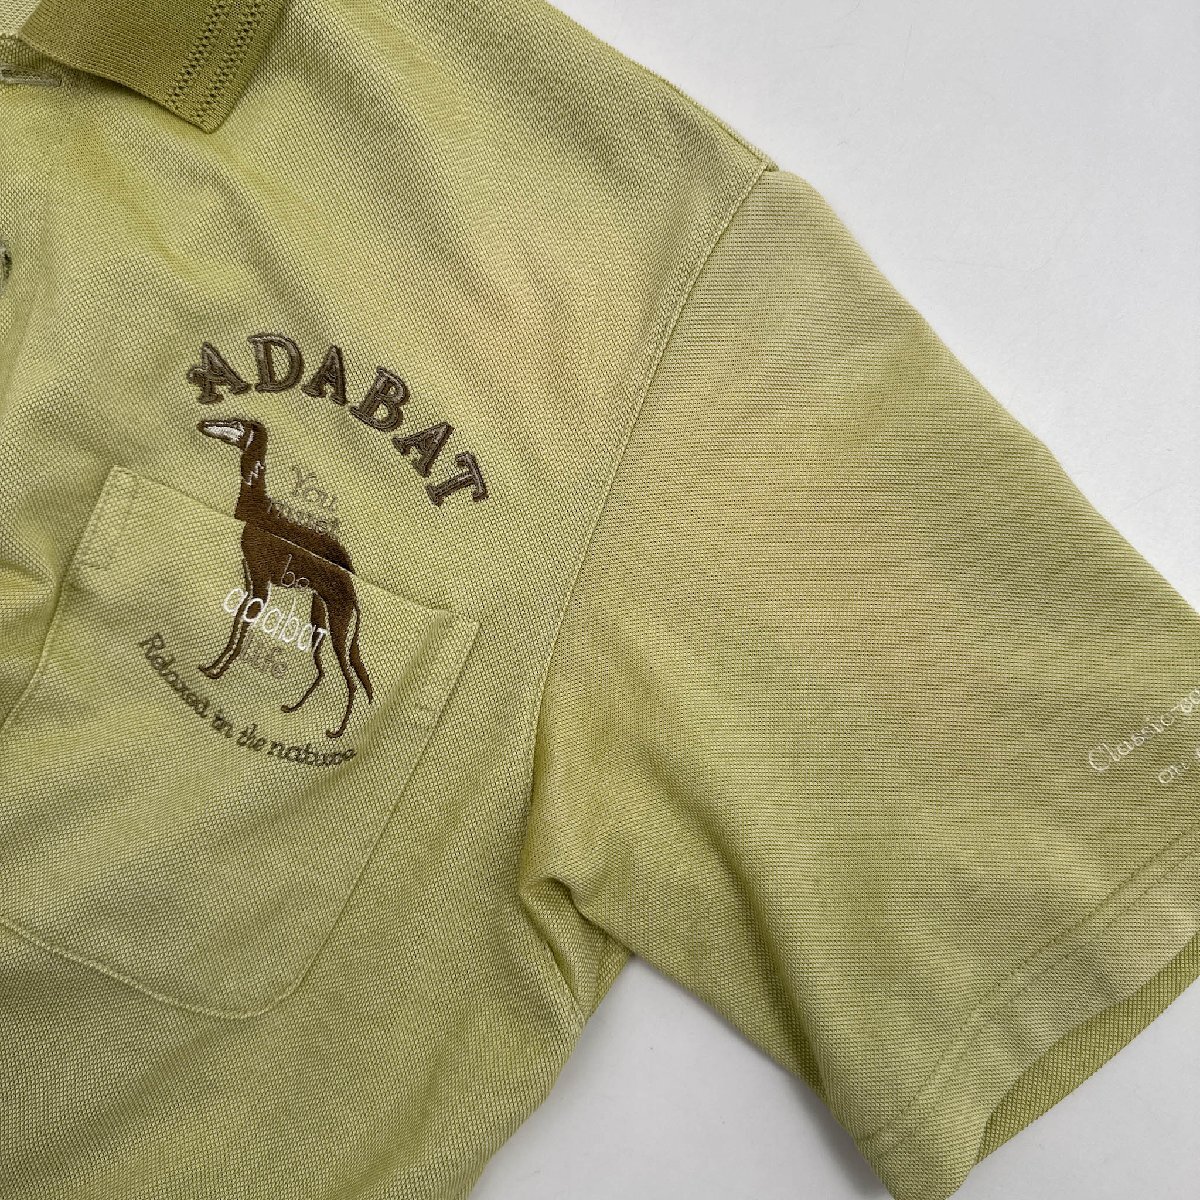 adabat アダバット 刺繍デザイン 半袖 ポロシャツ サイズ 4/ライムグリーン 系/メンズ/ゴルフ/日本製 ワールド_画像9